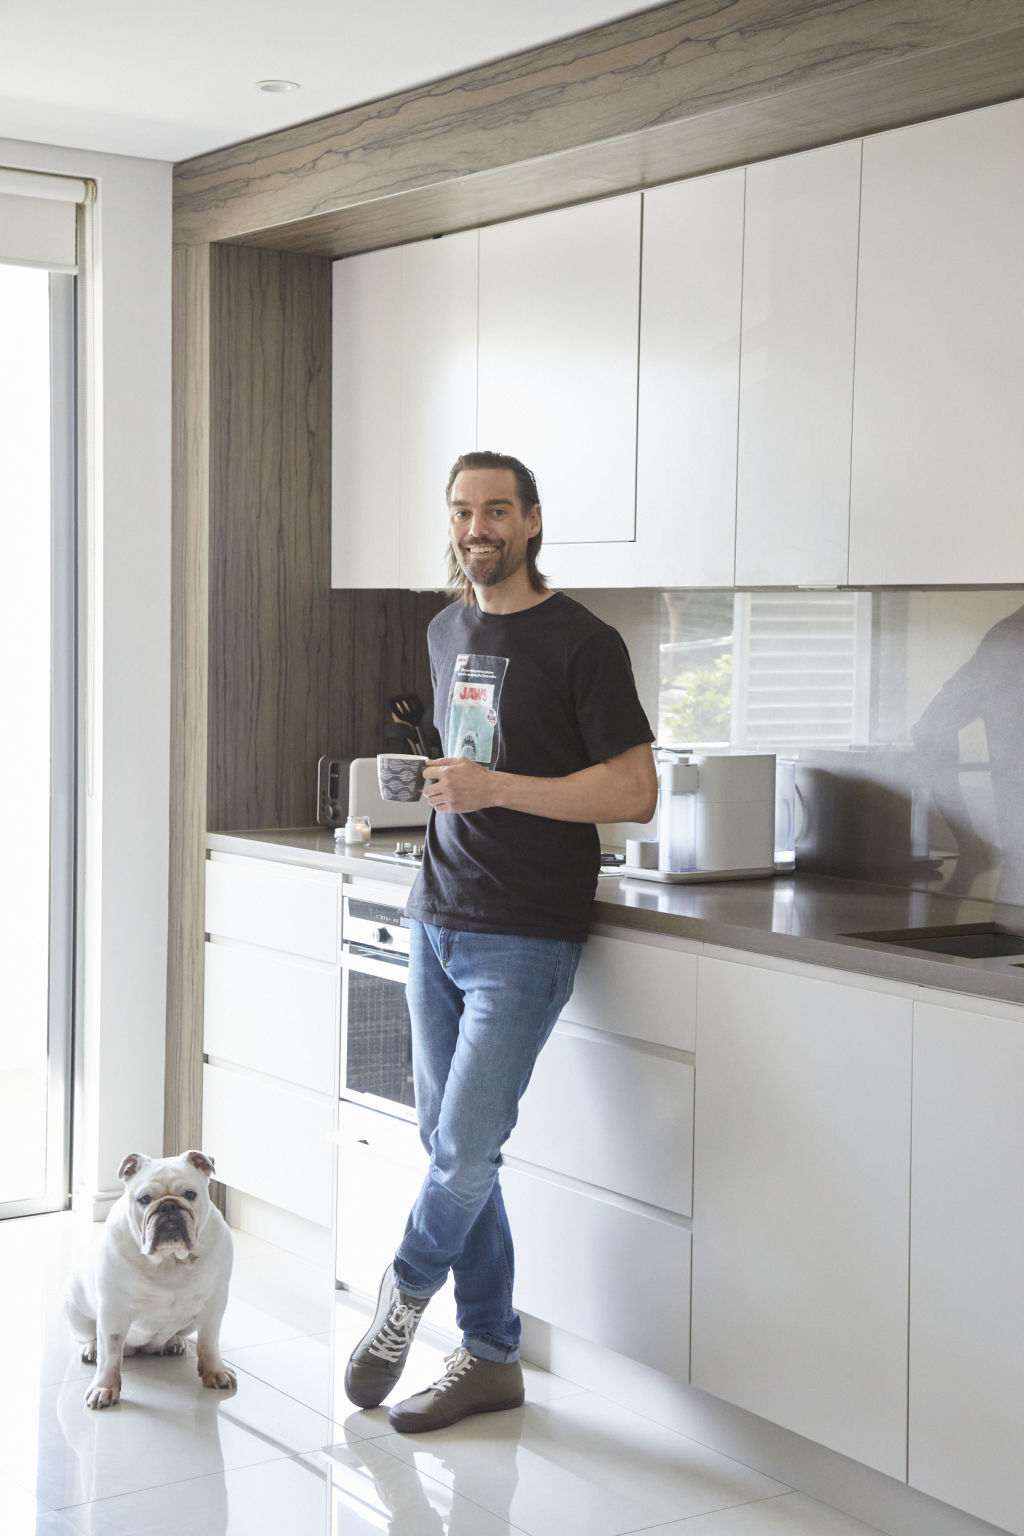 Crosher shares an apartment with his bulldog, Nala. Photo: Nicky Ryan